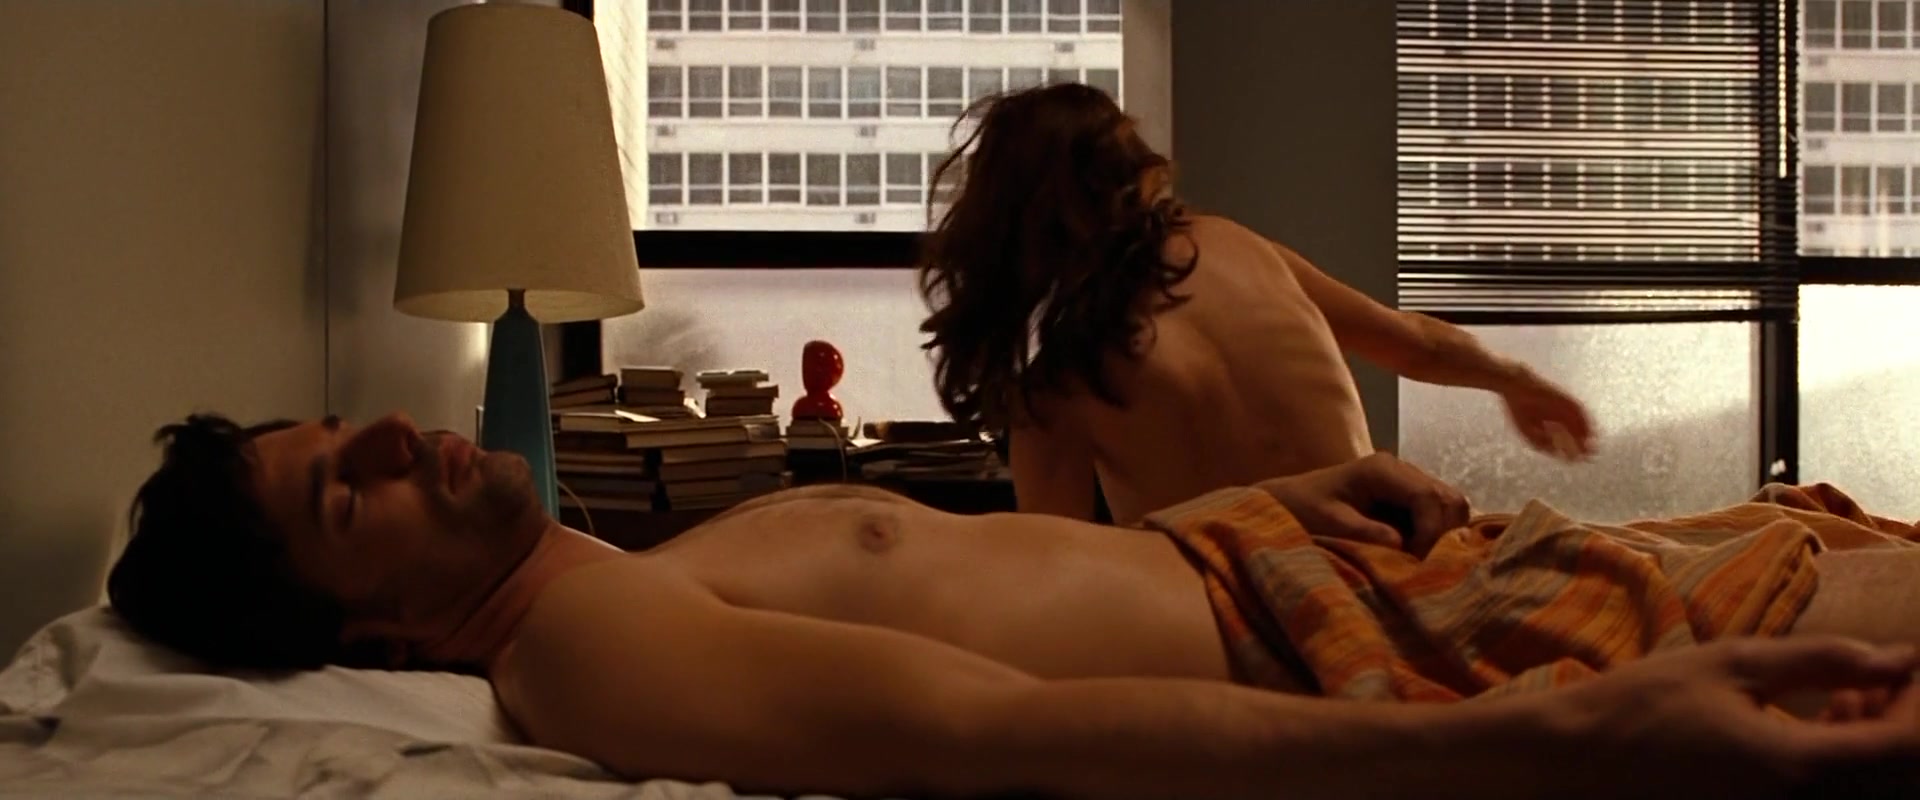 Rachel McAdams - The Time Traveler's Wife (2009) Naked movie scene.